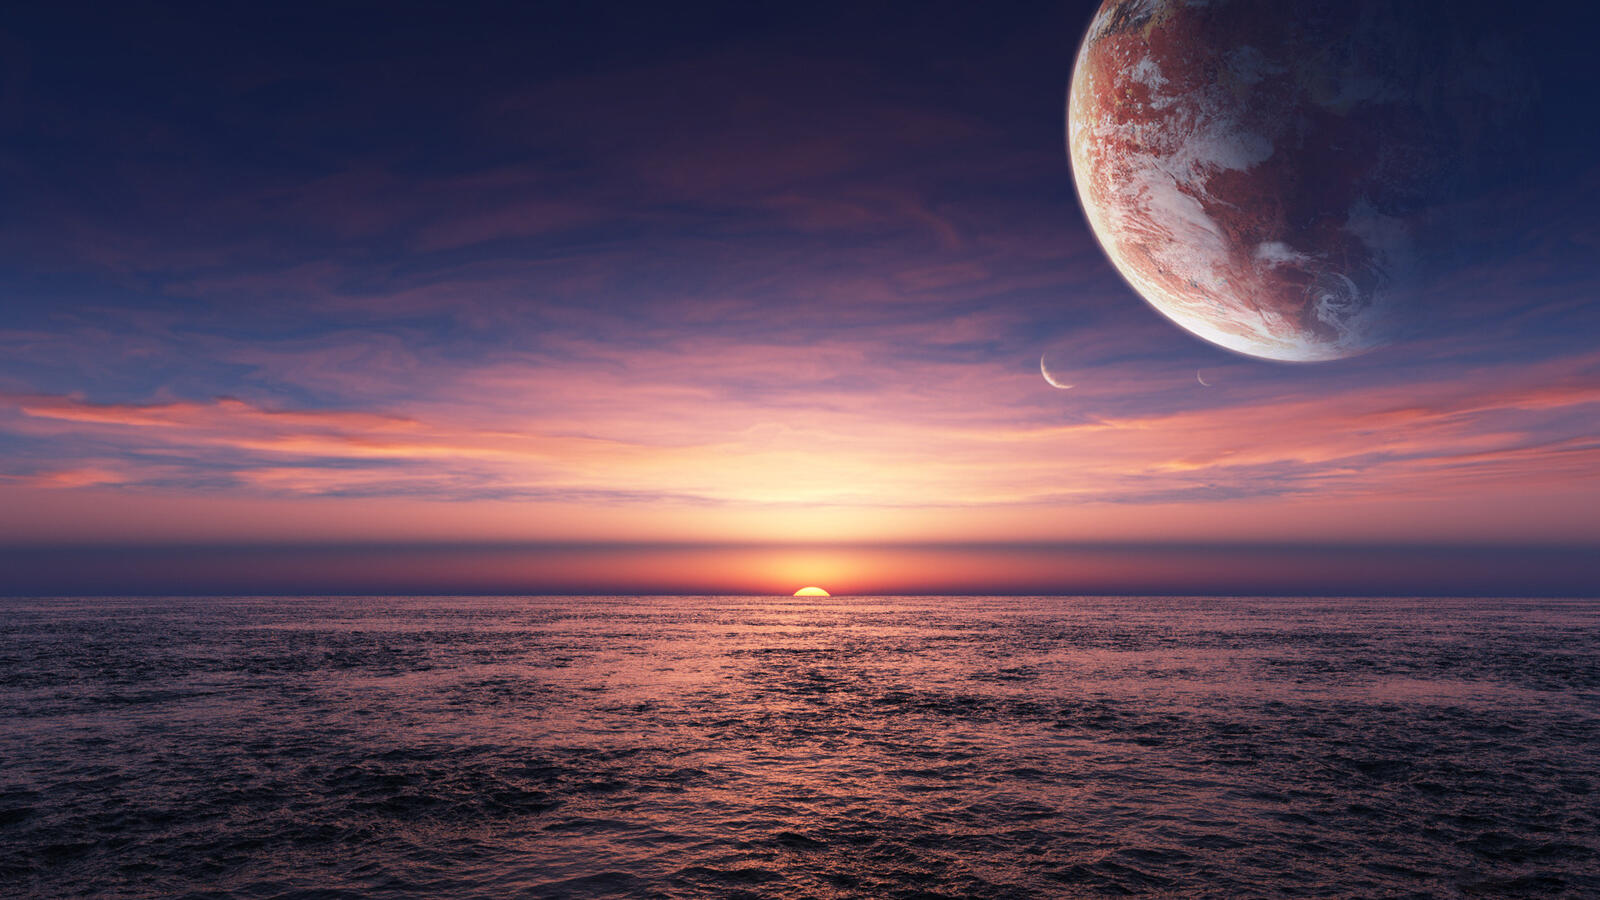 Wallpapers ocean sunset planet on the desktop